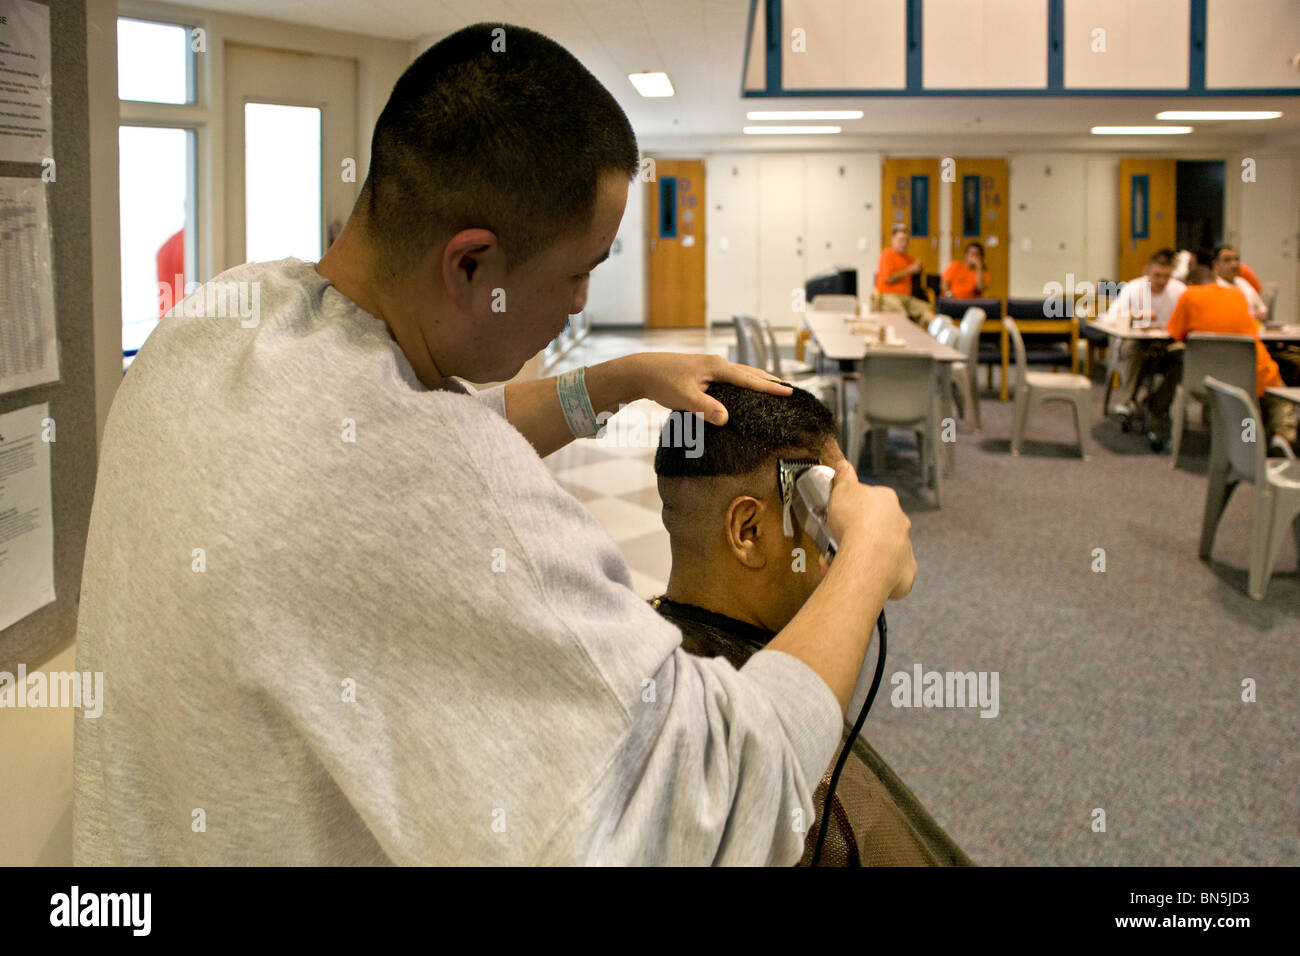 A Hispanic inmate gets a haircut in the dayroom of a cell block at the Santa Ana, CA, city jail. Stock Photo